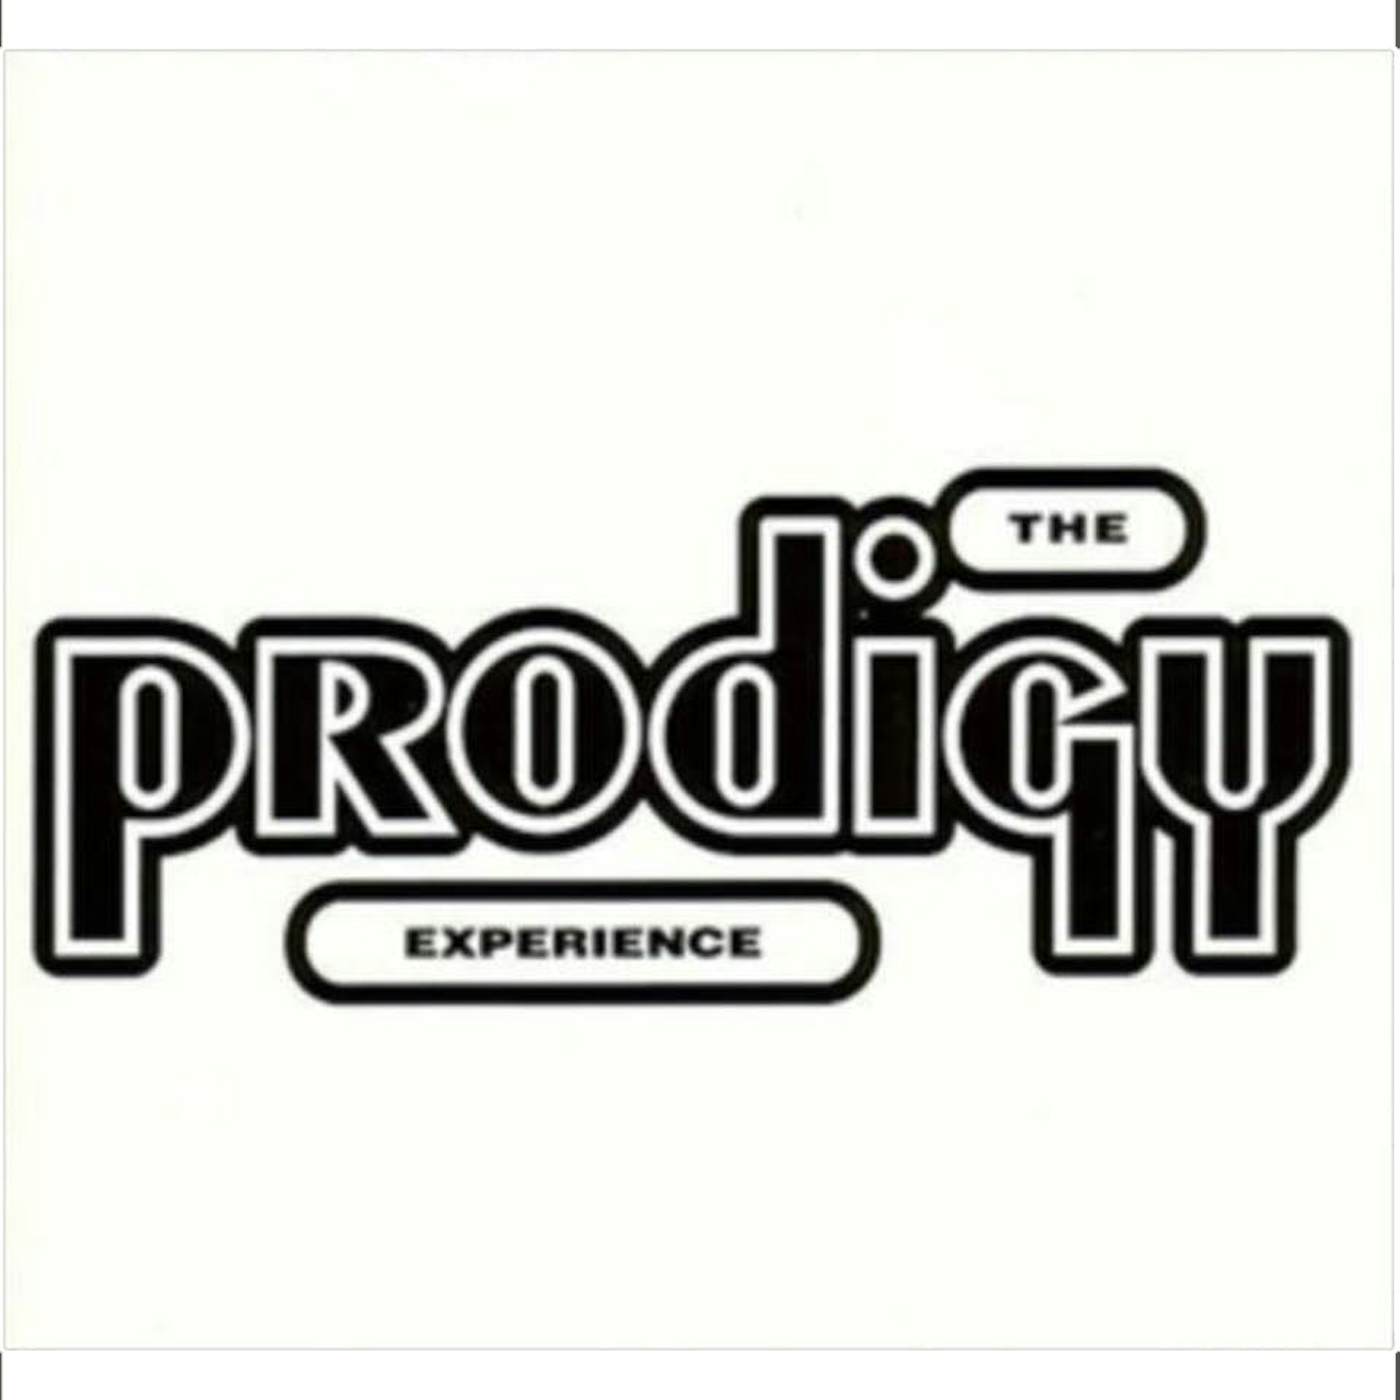 The Prodigy LP Vinyl Record - Experience